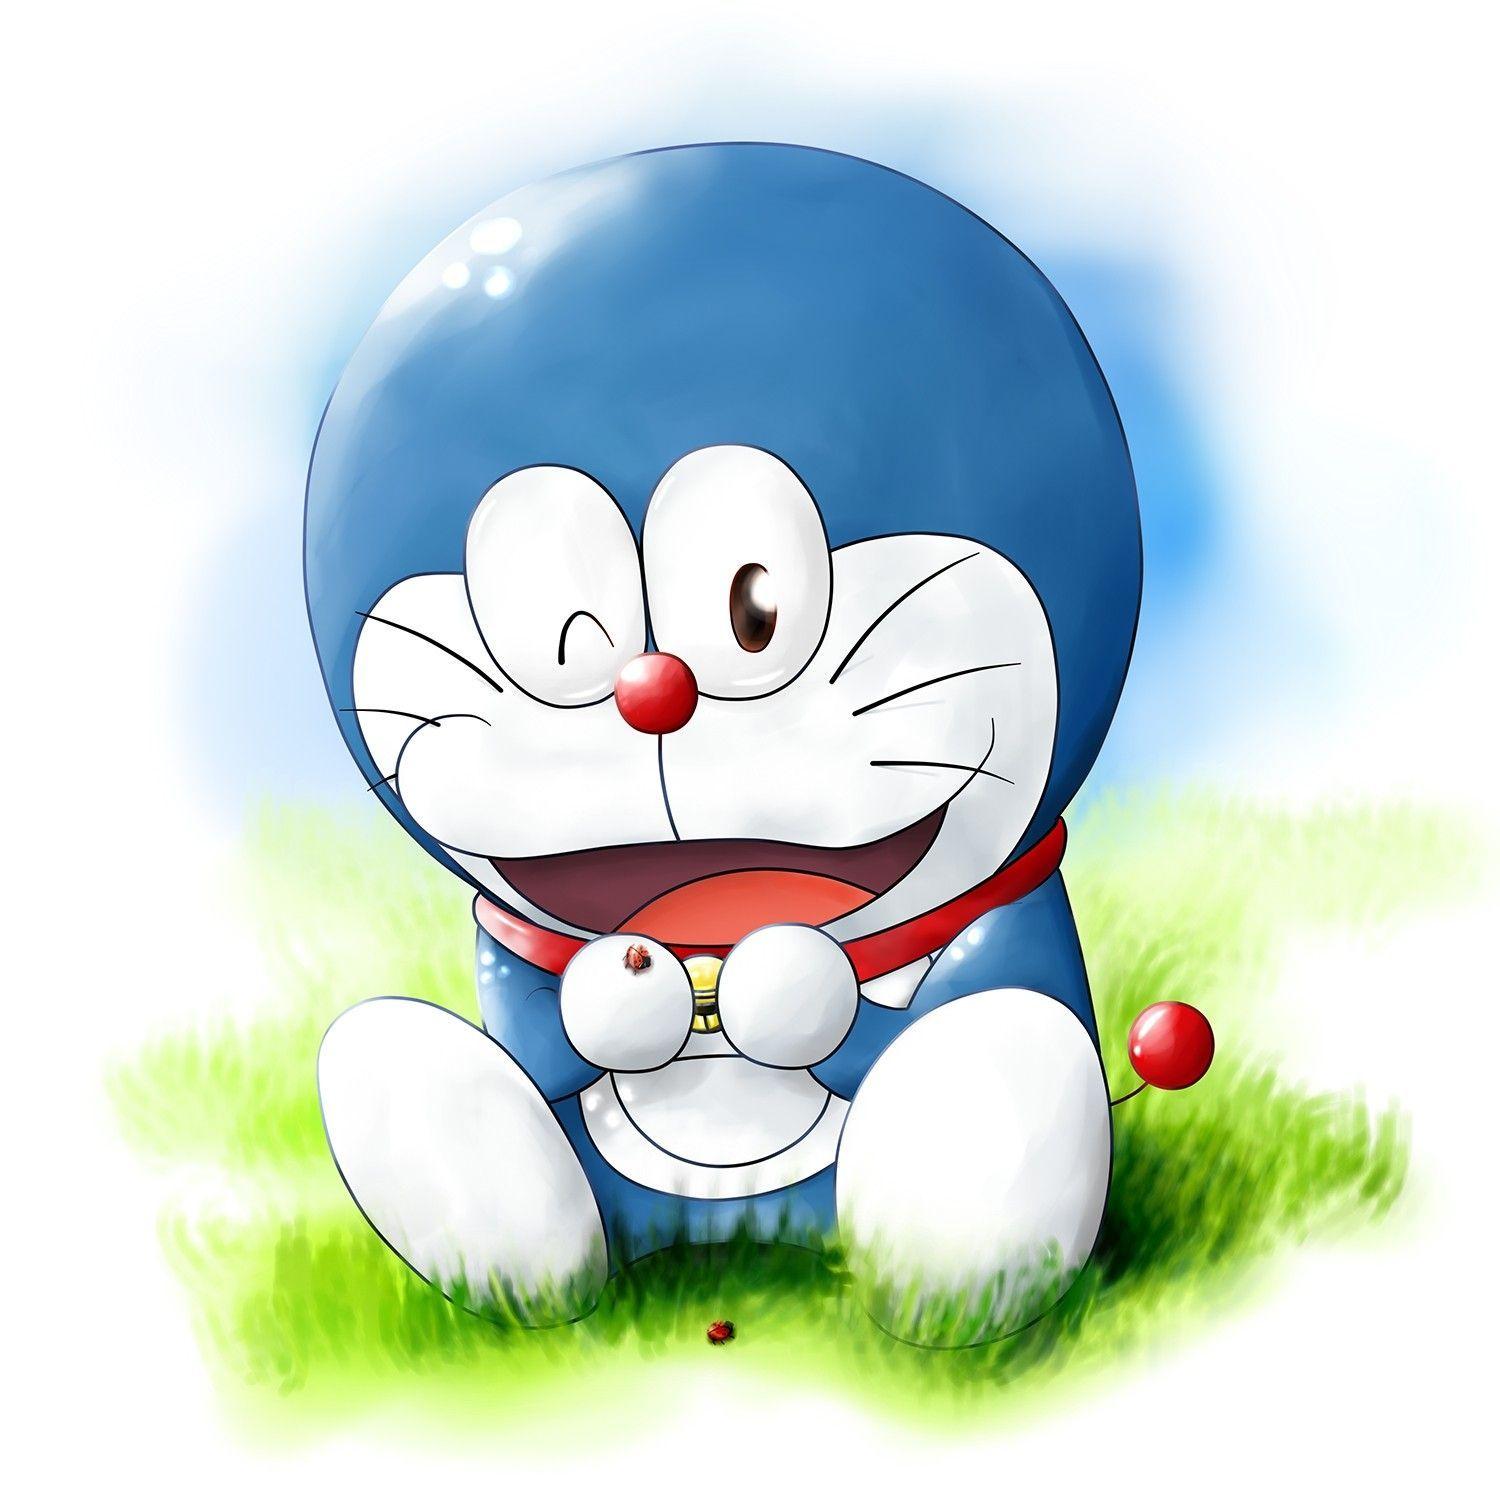 Doraemon is a fictional character in a Japanese manga series. - Doraemon